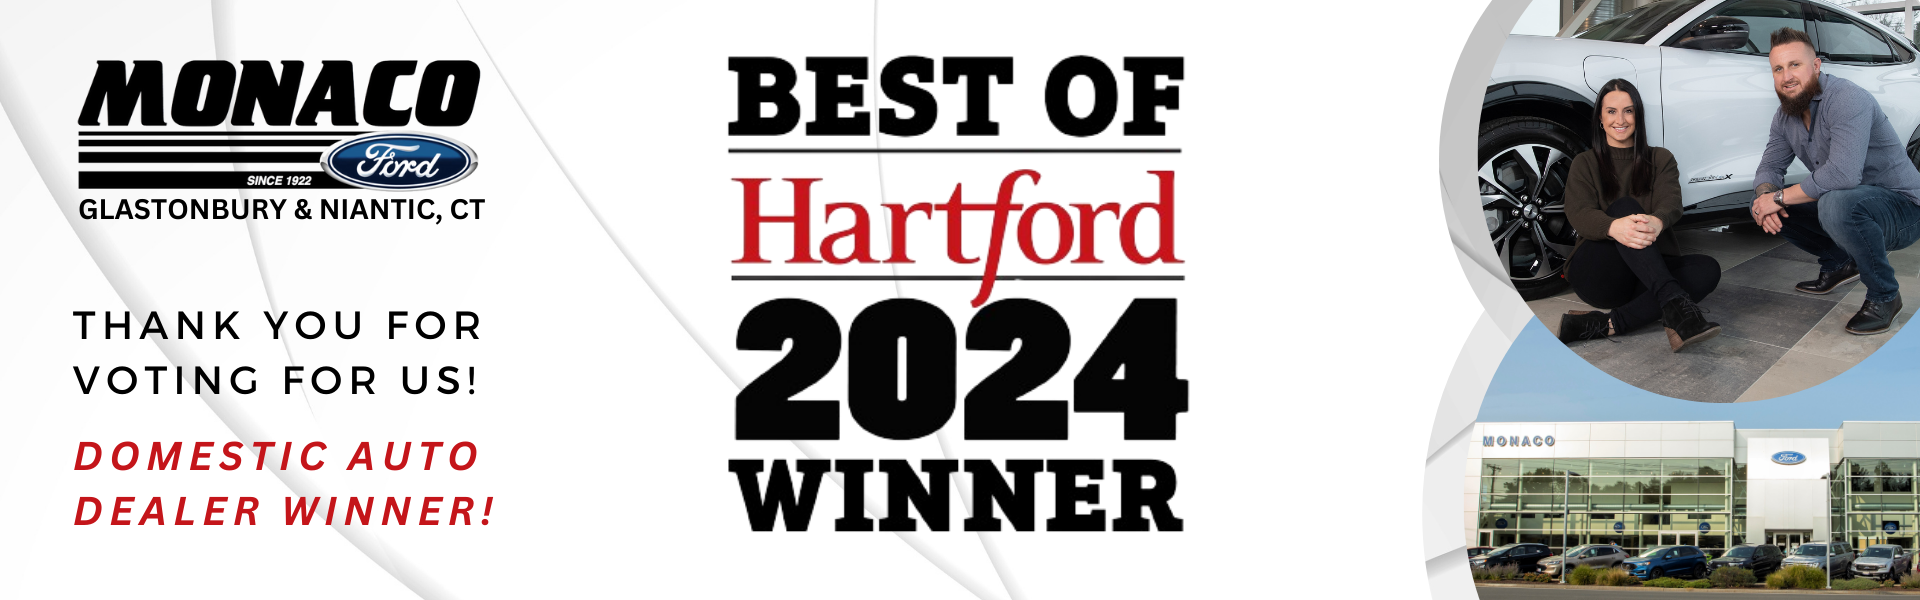 Best of Hartford Auto Dealer!